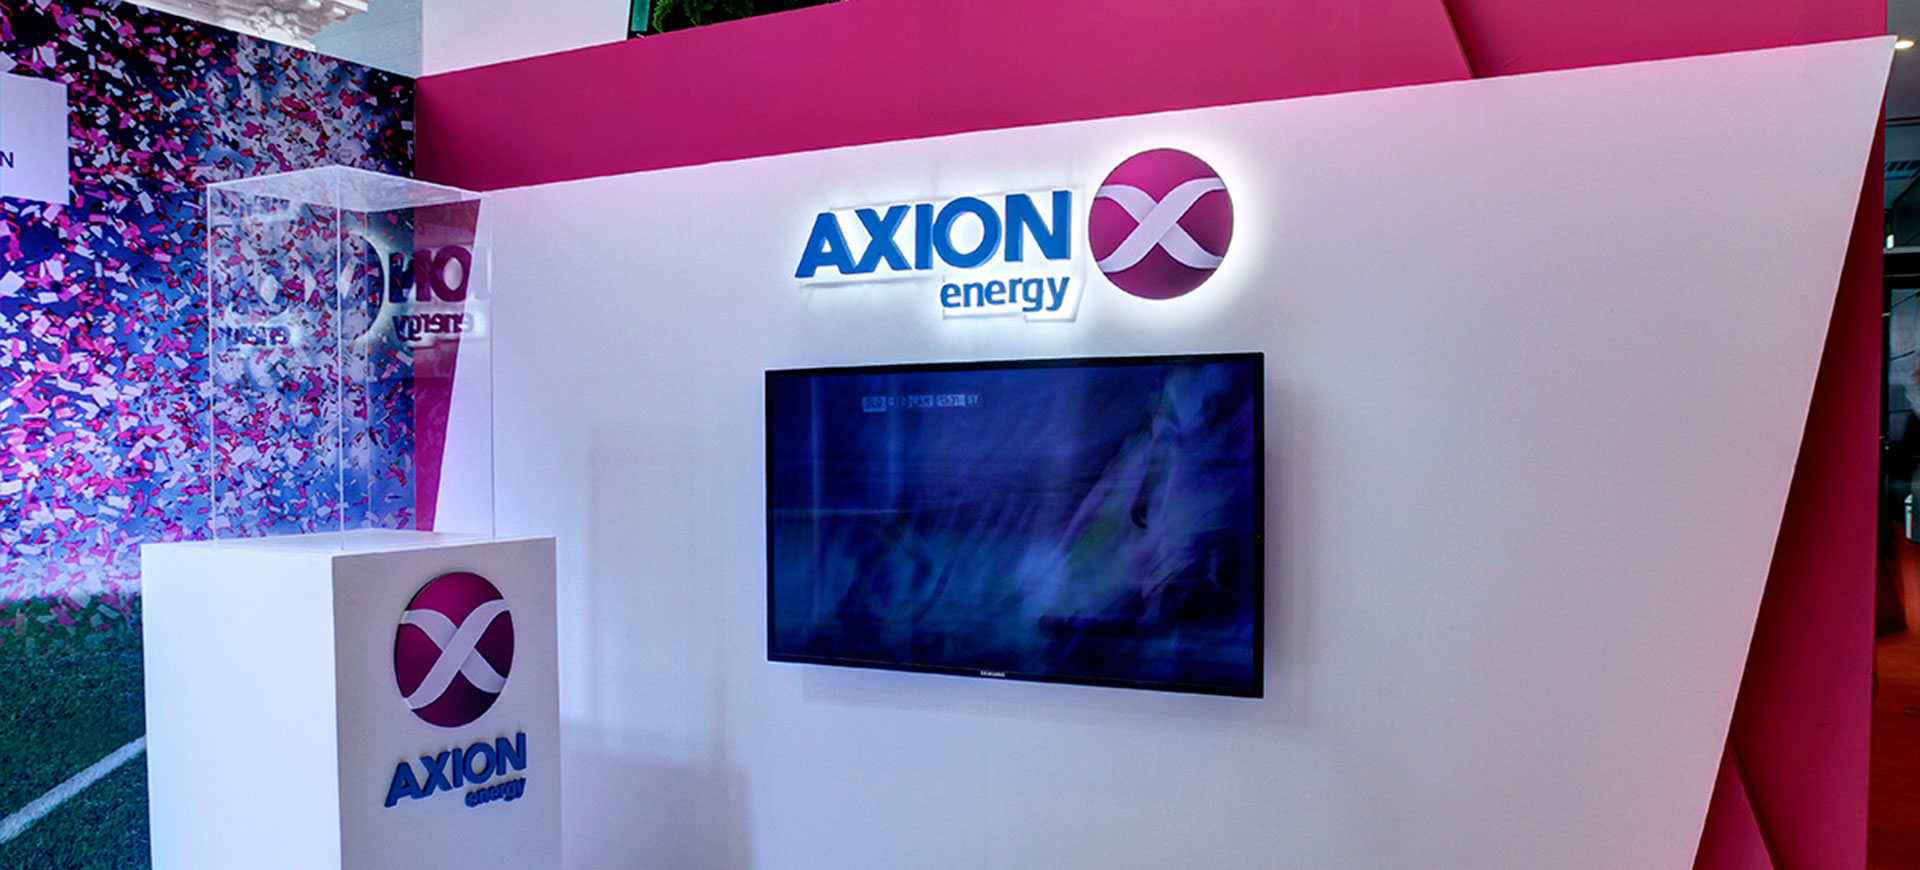 Axion Energy - Salón del automóvil Bs. As. 2017